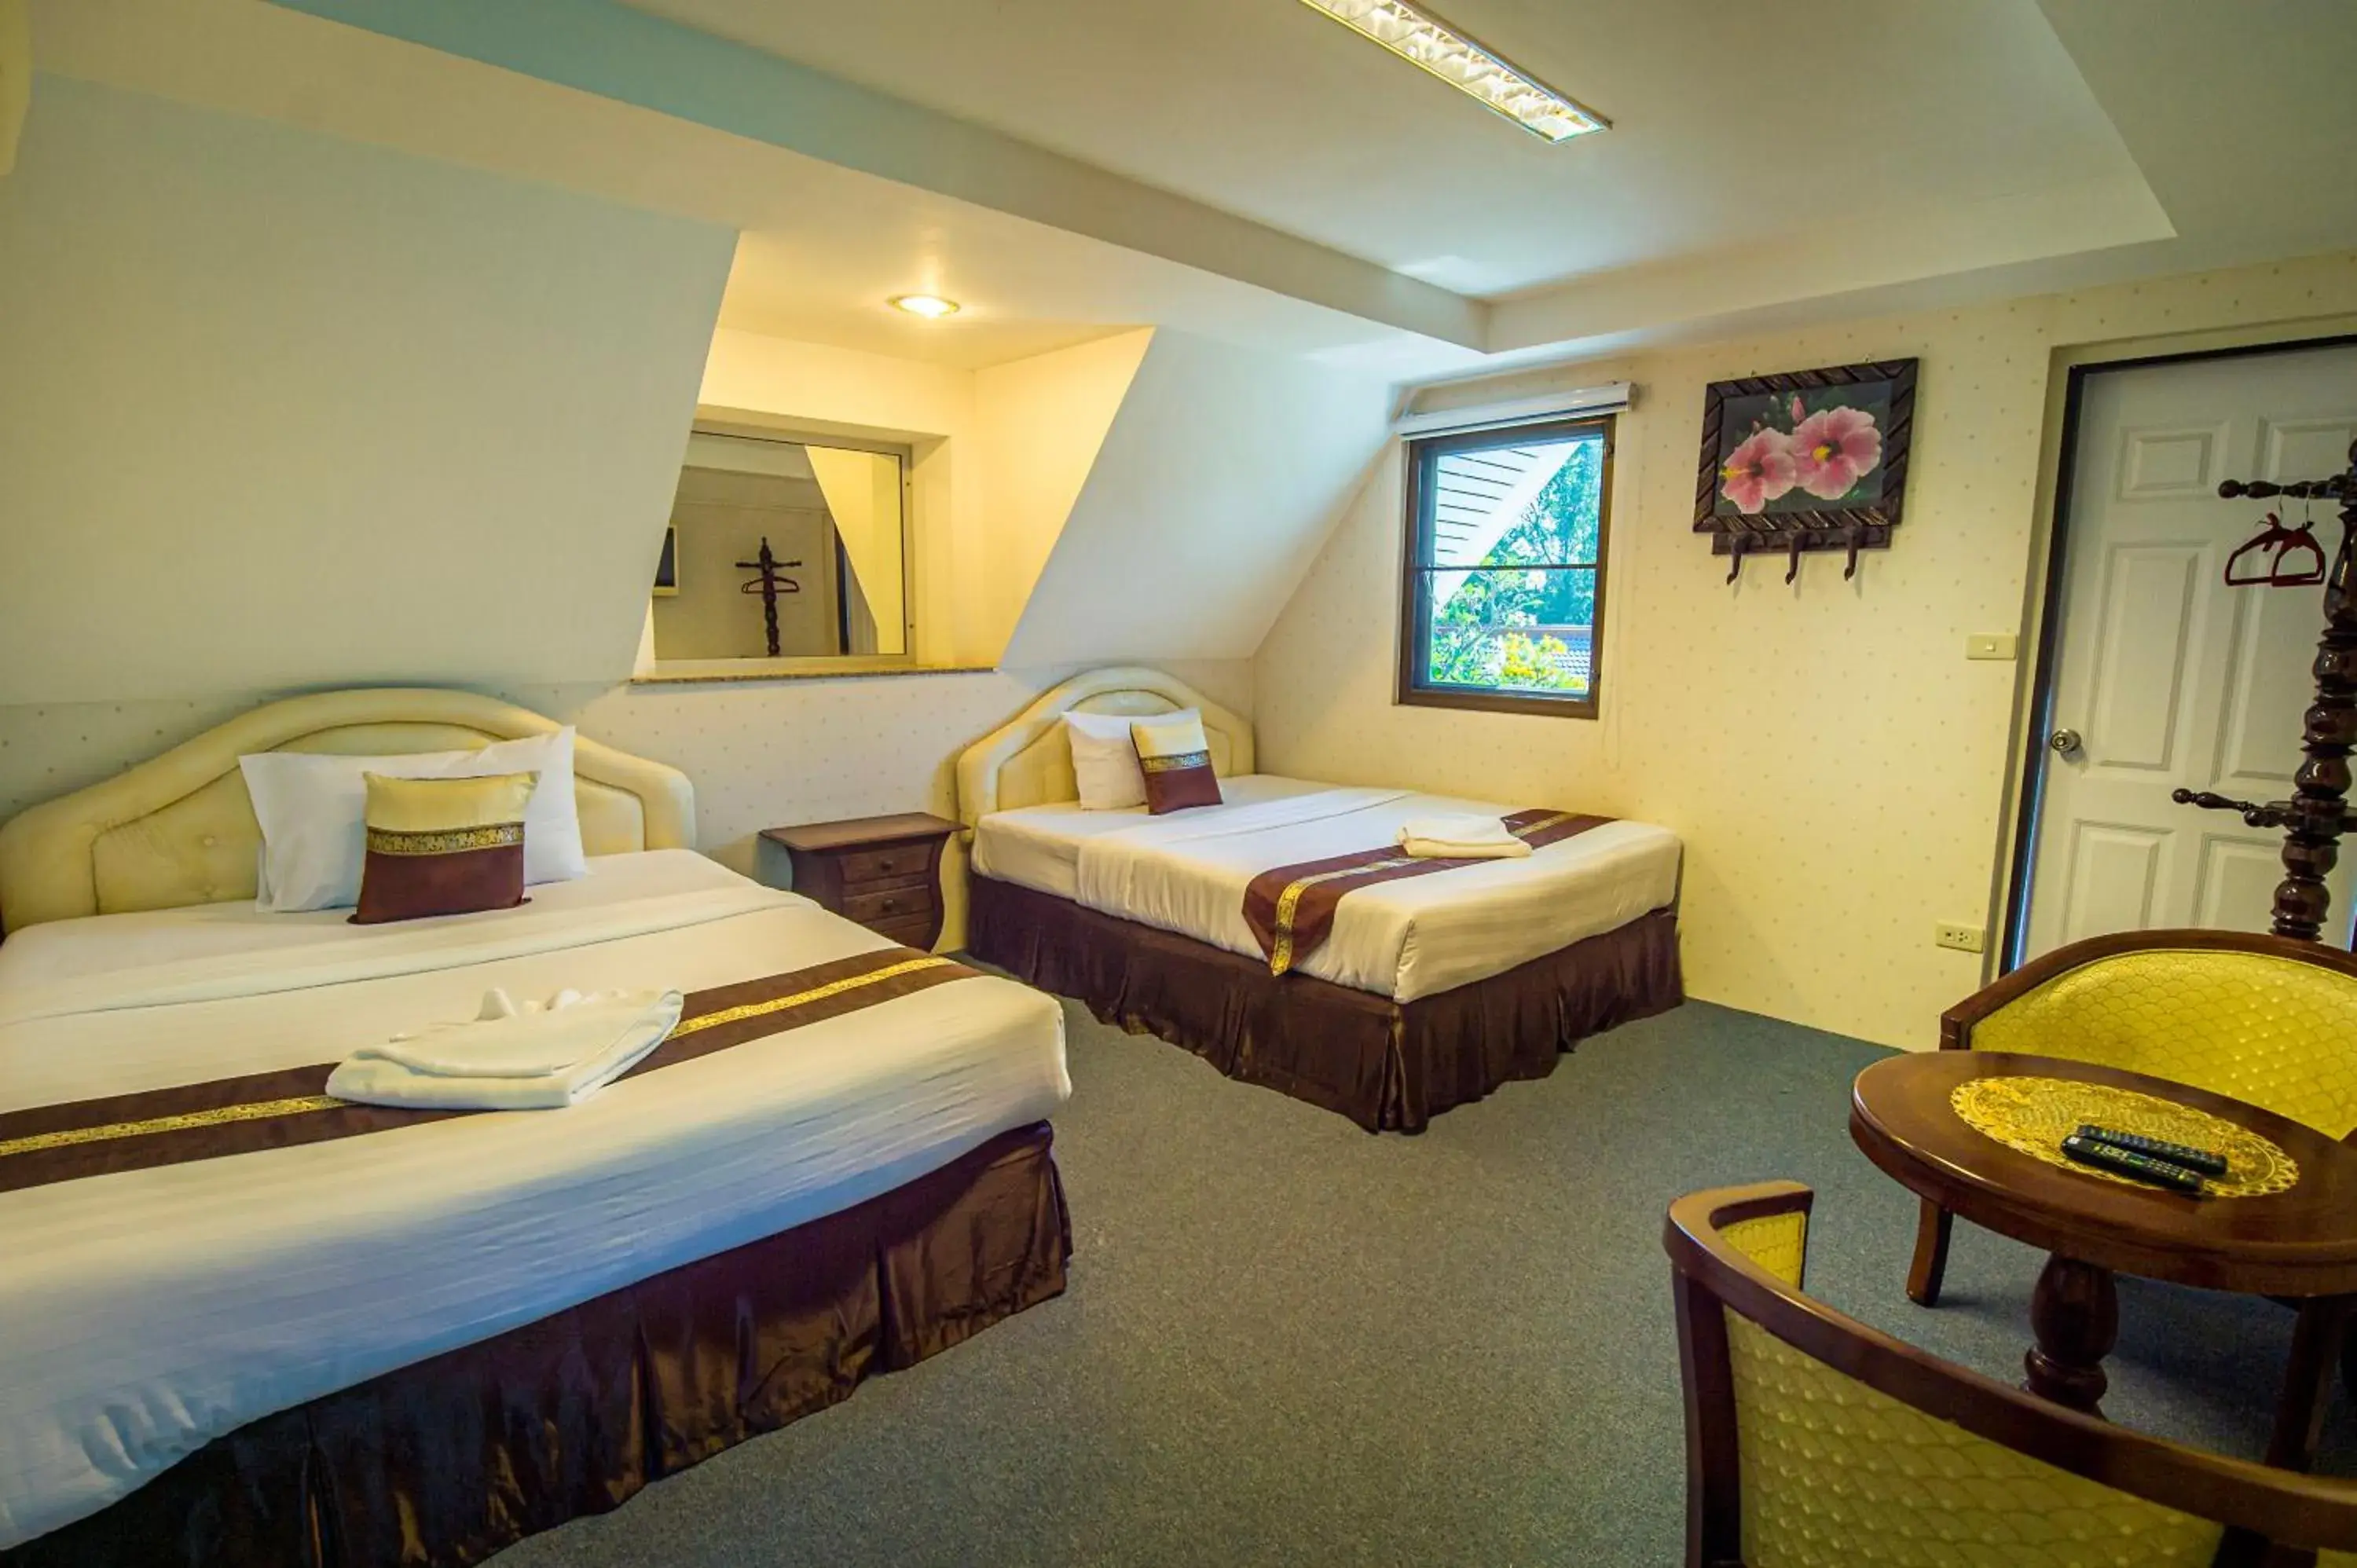 Bedroom, Bed in Dreampark resort